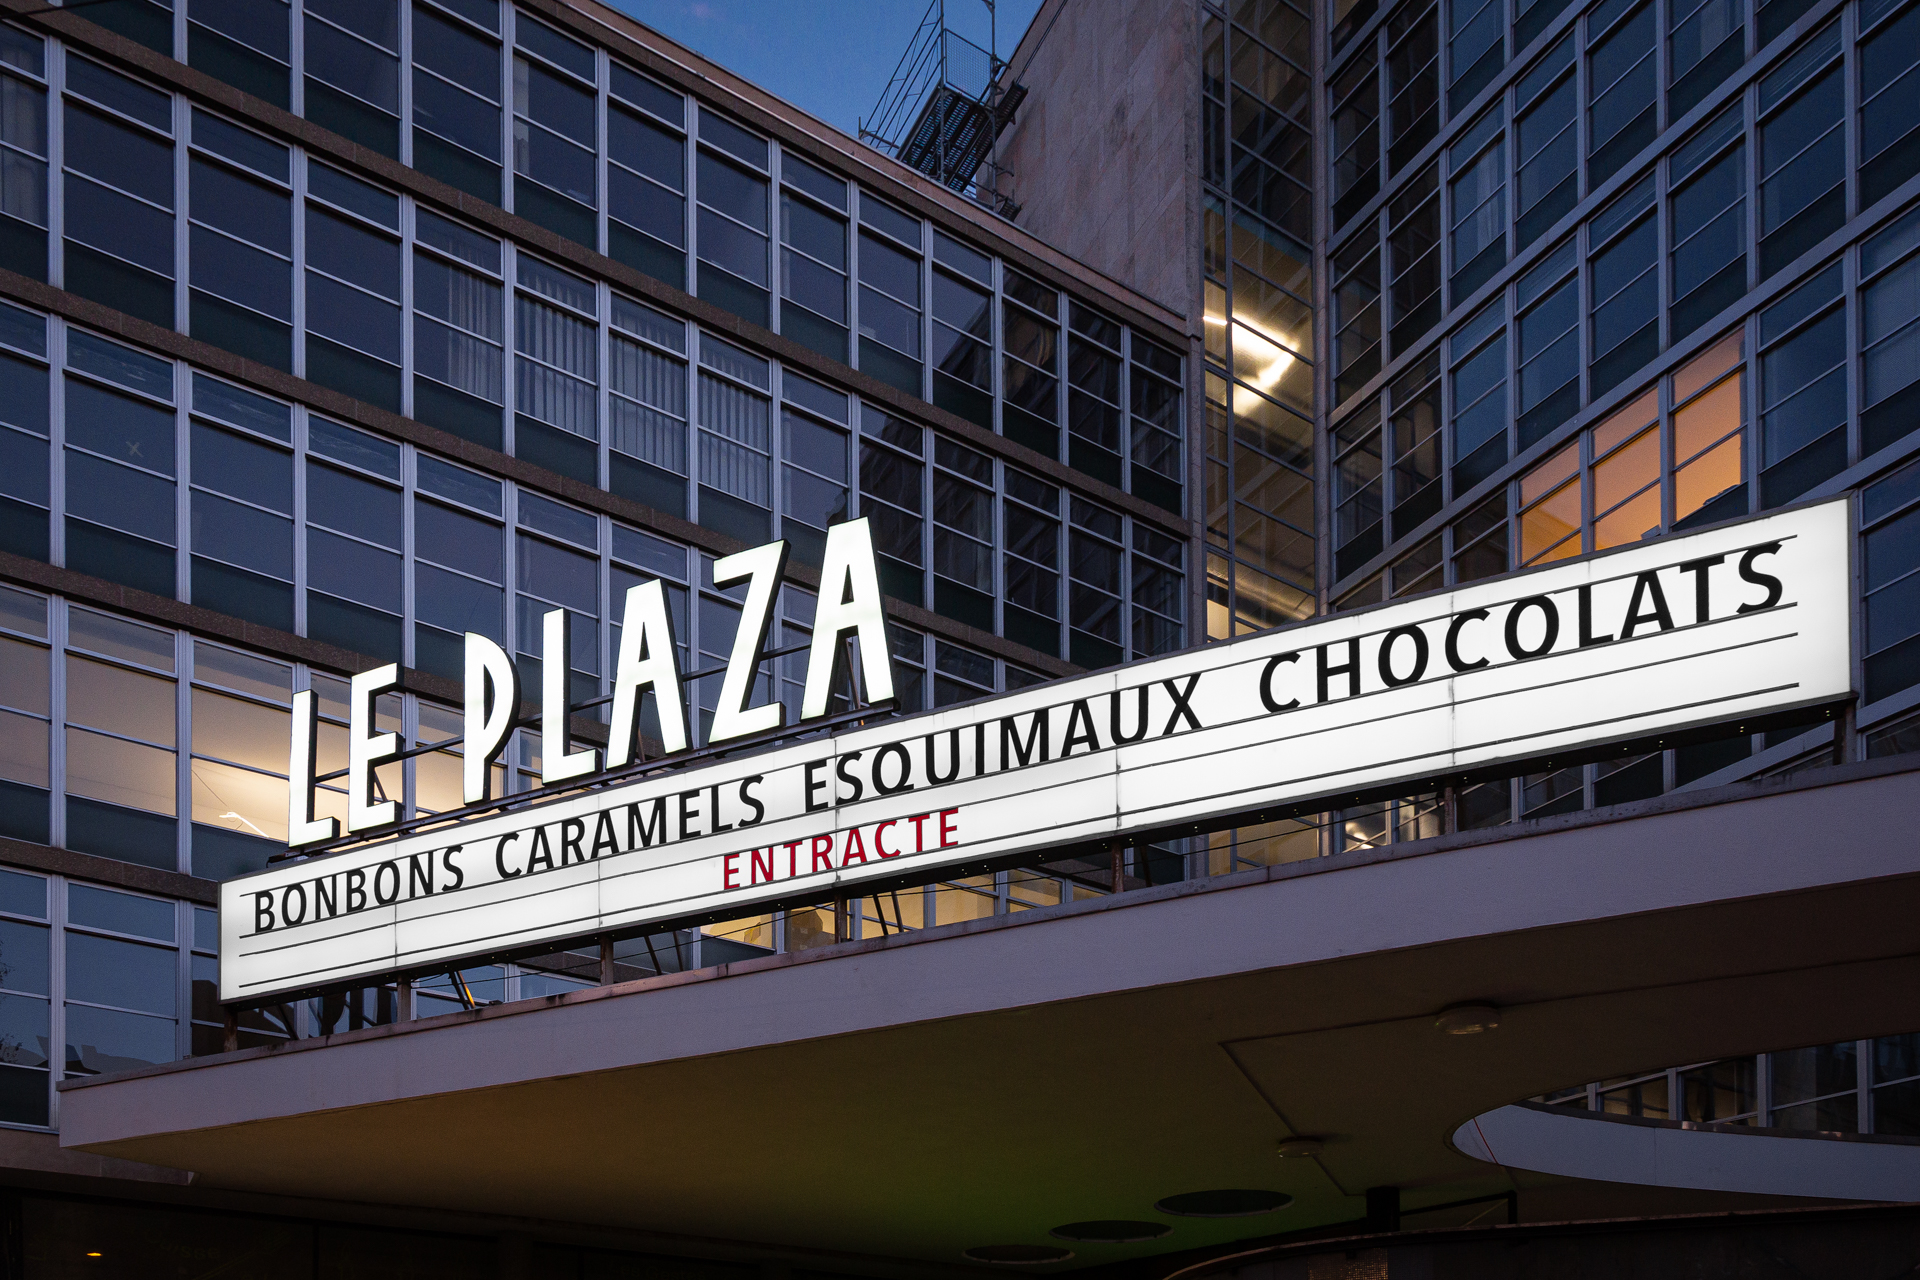 Enseigne lumineuse du Plaza: Bonbons, caramels, esquimaux, chocolats, Entracte